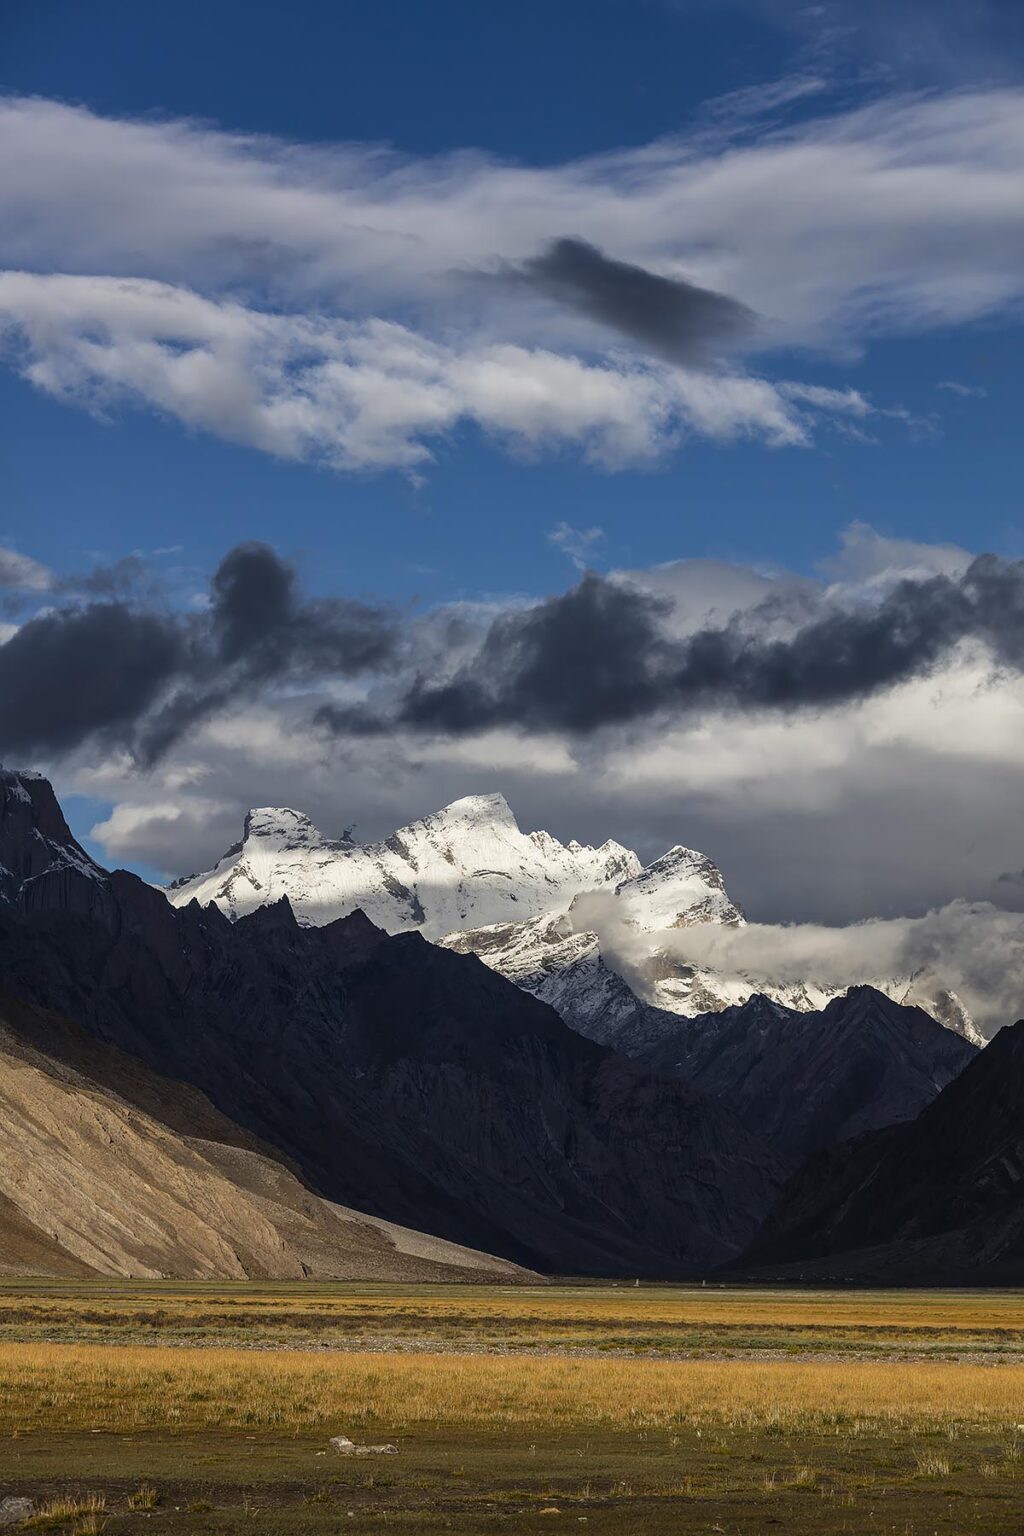 The massive himalayan peaks of NUN and KUN are 23,409 feet high - ZANSKAR, LADAKH, INDIA